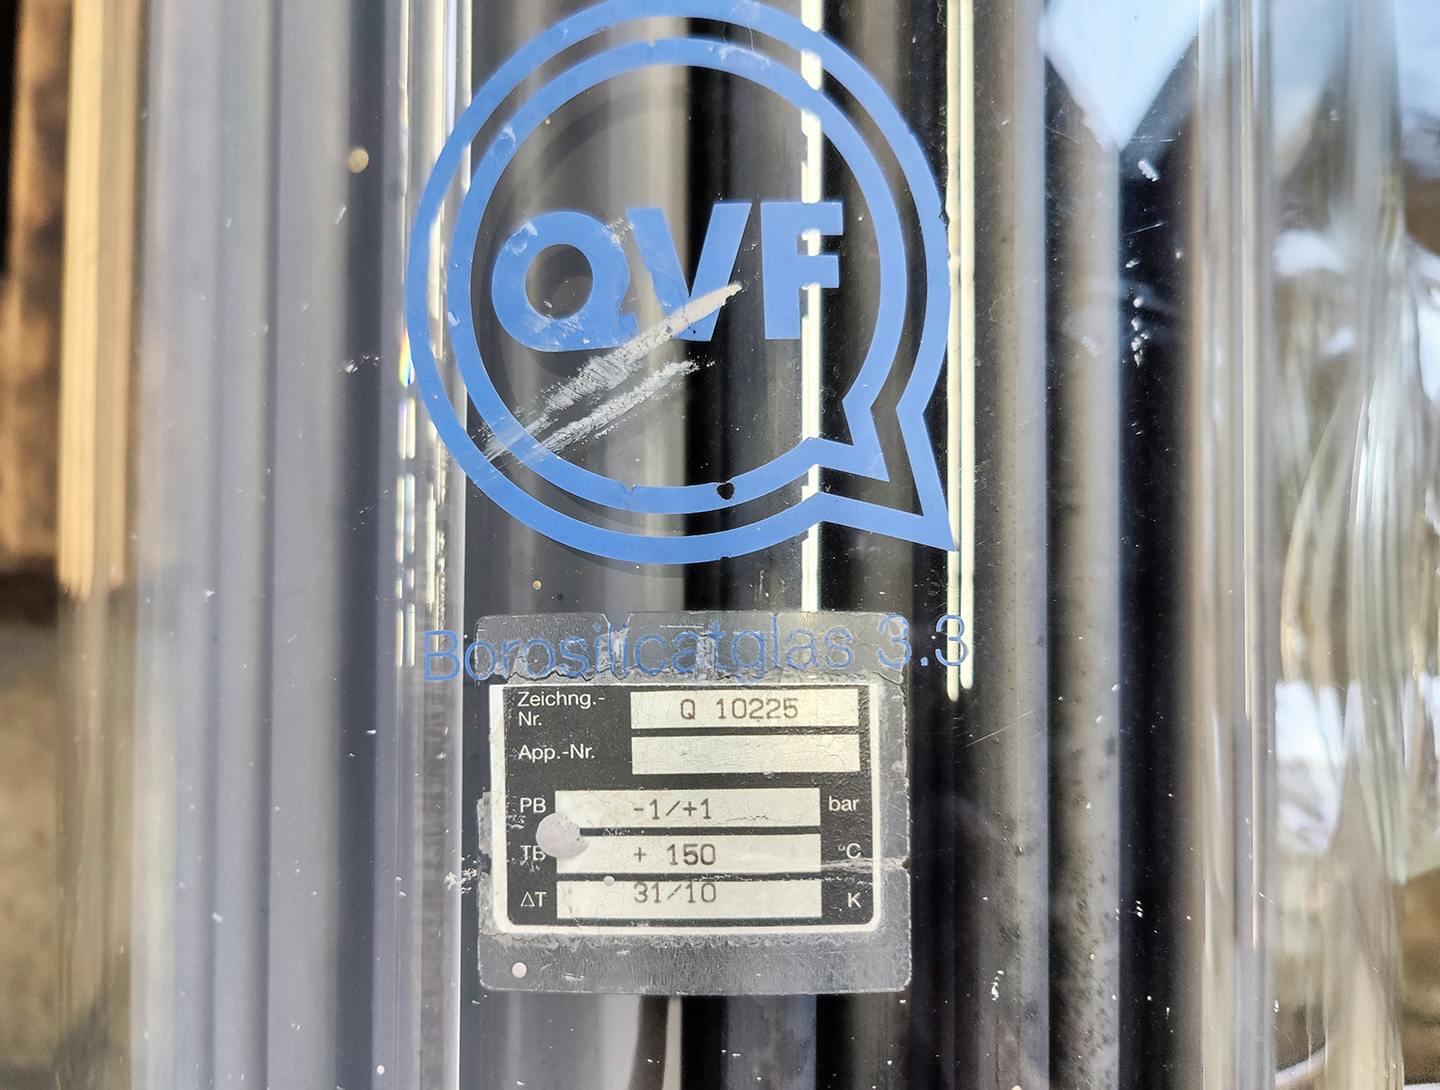 QVF Glasstechnik S-ROB71/300/SH/3SIC - 7,1 m² - Mantel- en buiswarmtewisselaar - image 8